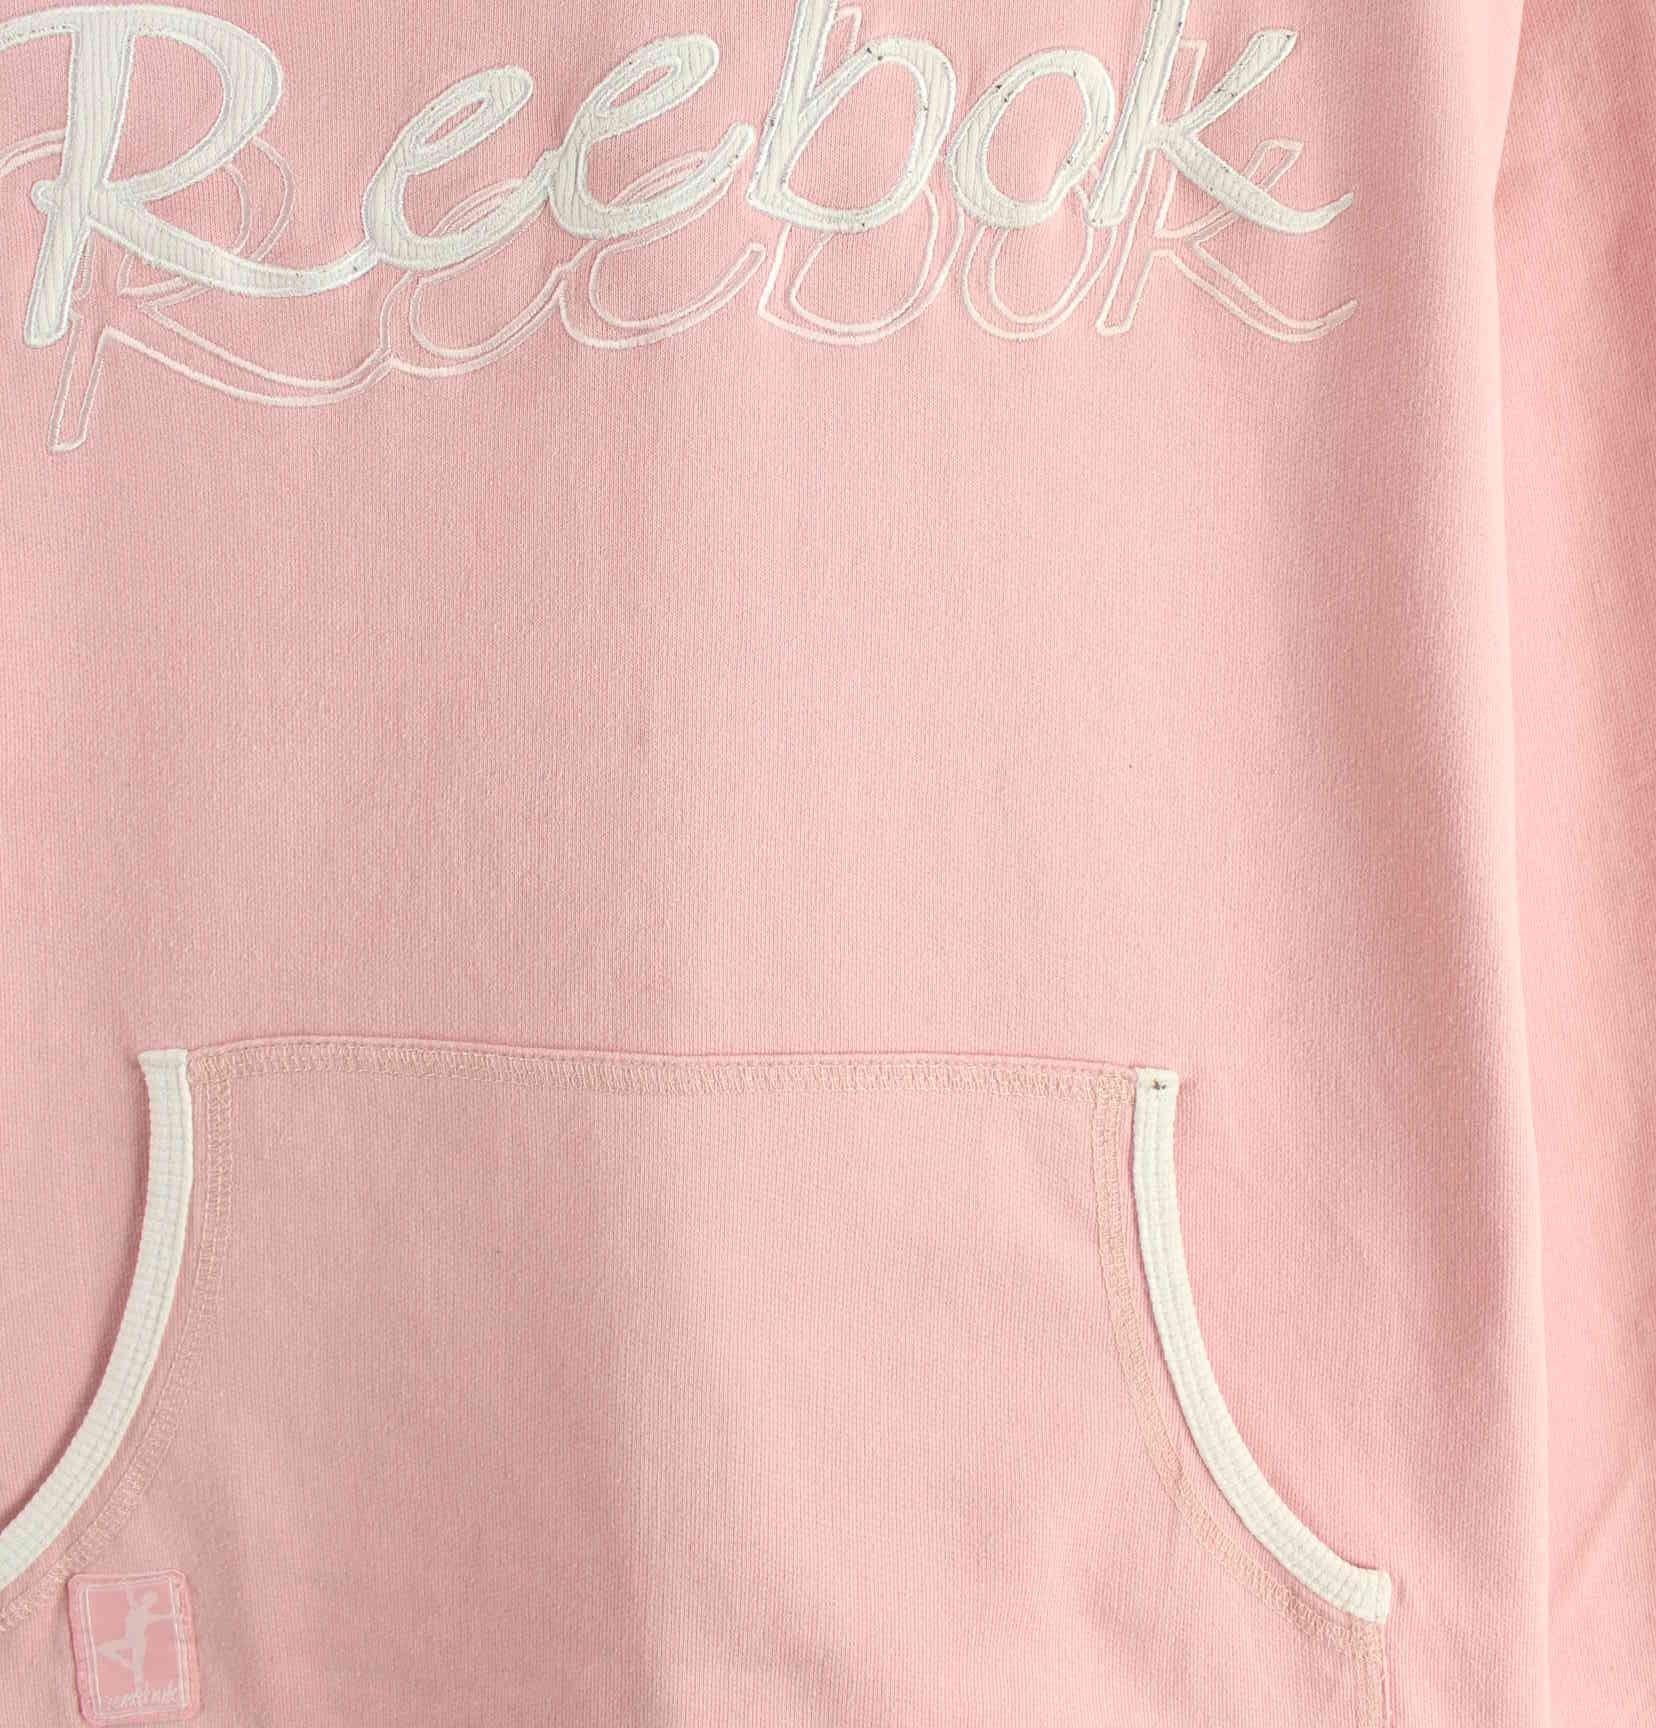 Reebok Damen Embroidered Hoodie Rosa L (detail image 1)